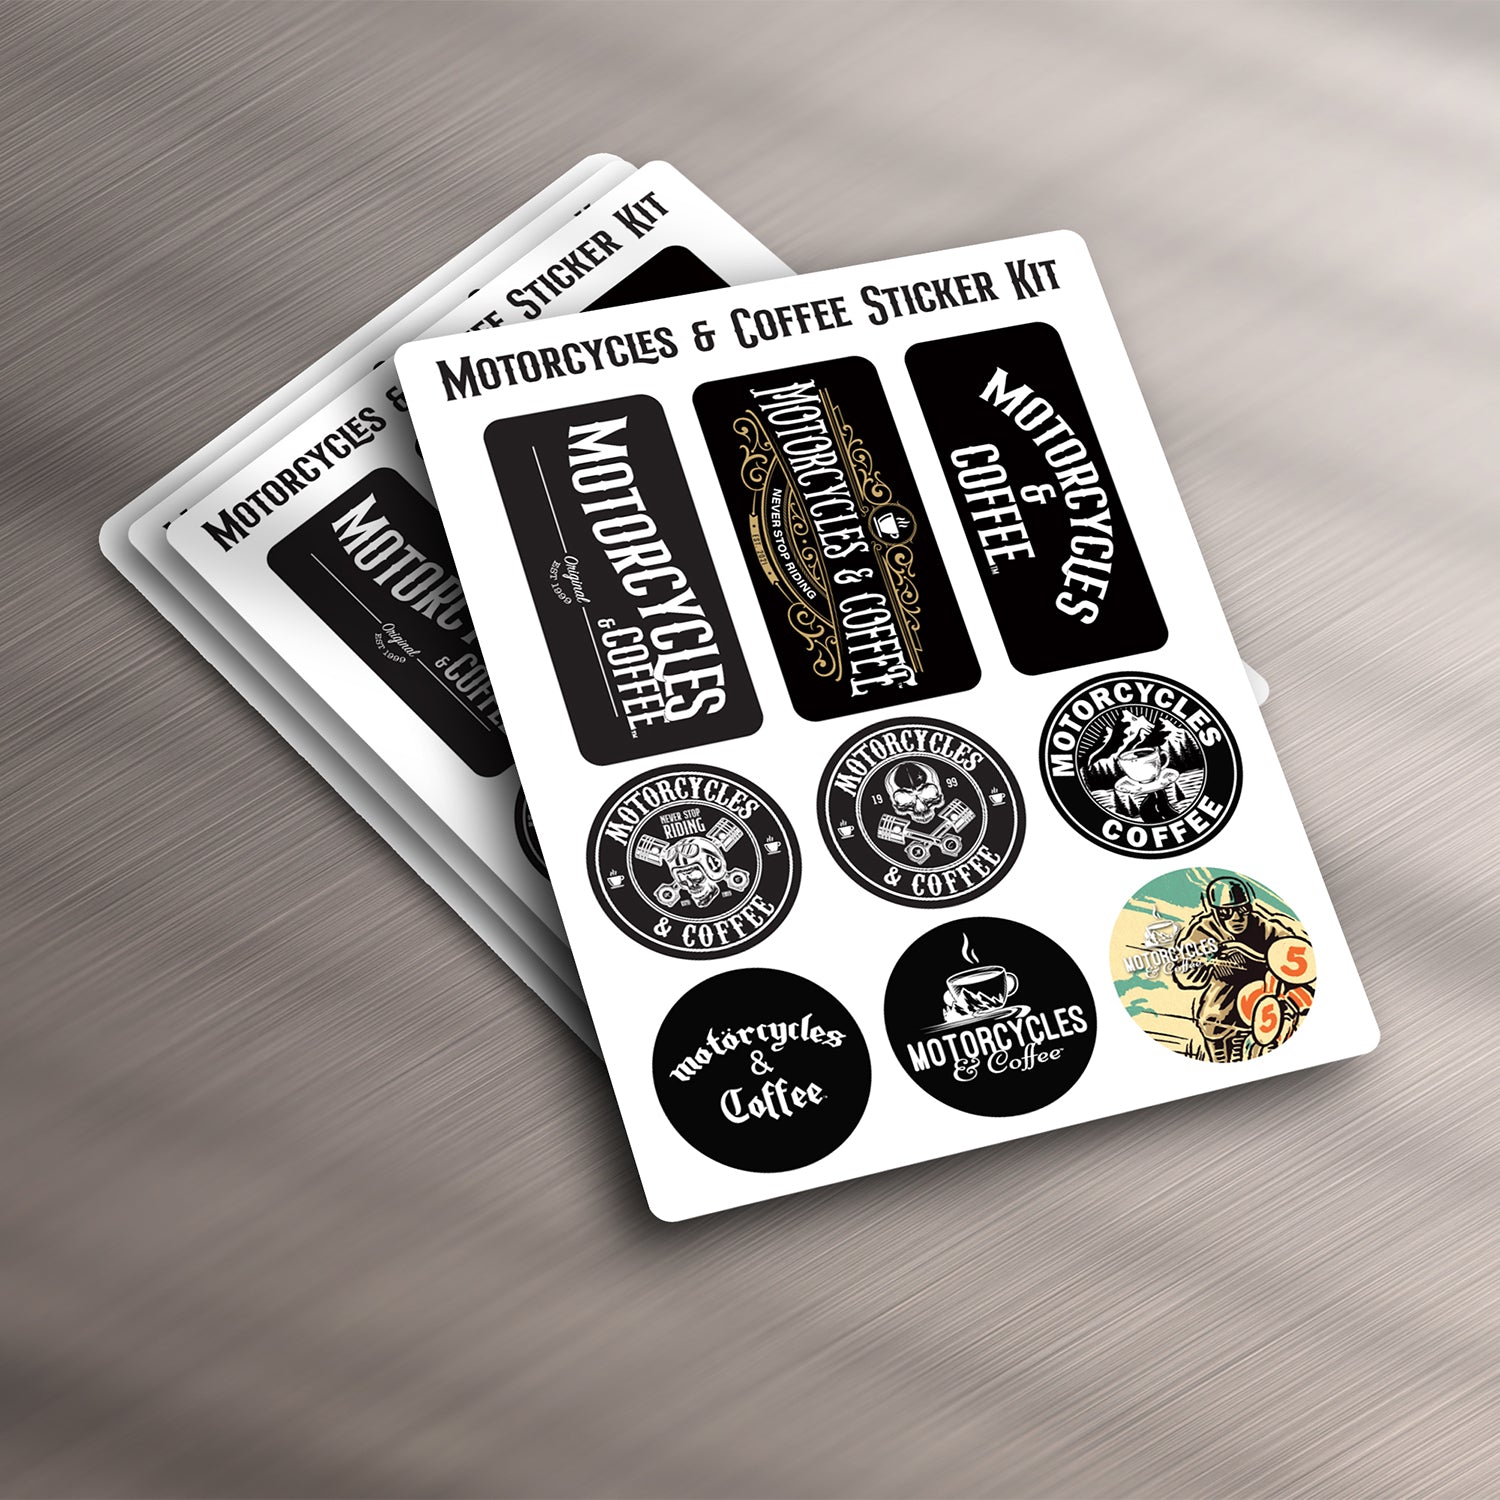 Motorcycles & Coffee - Sticker Kit